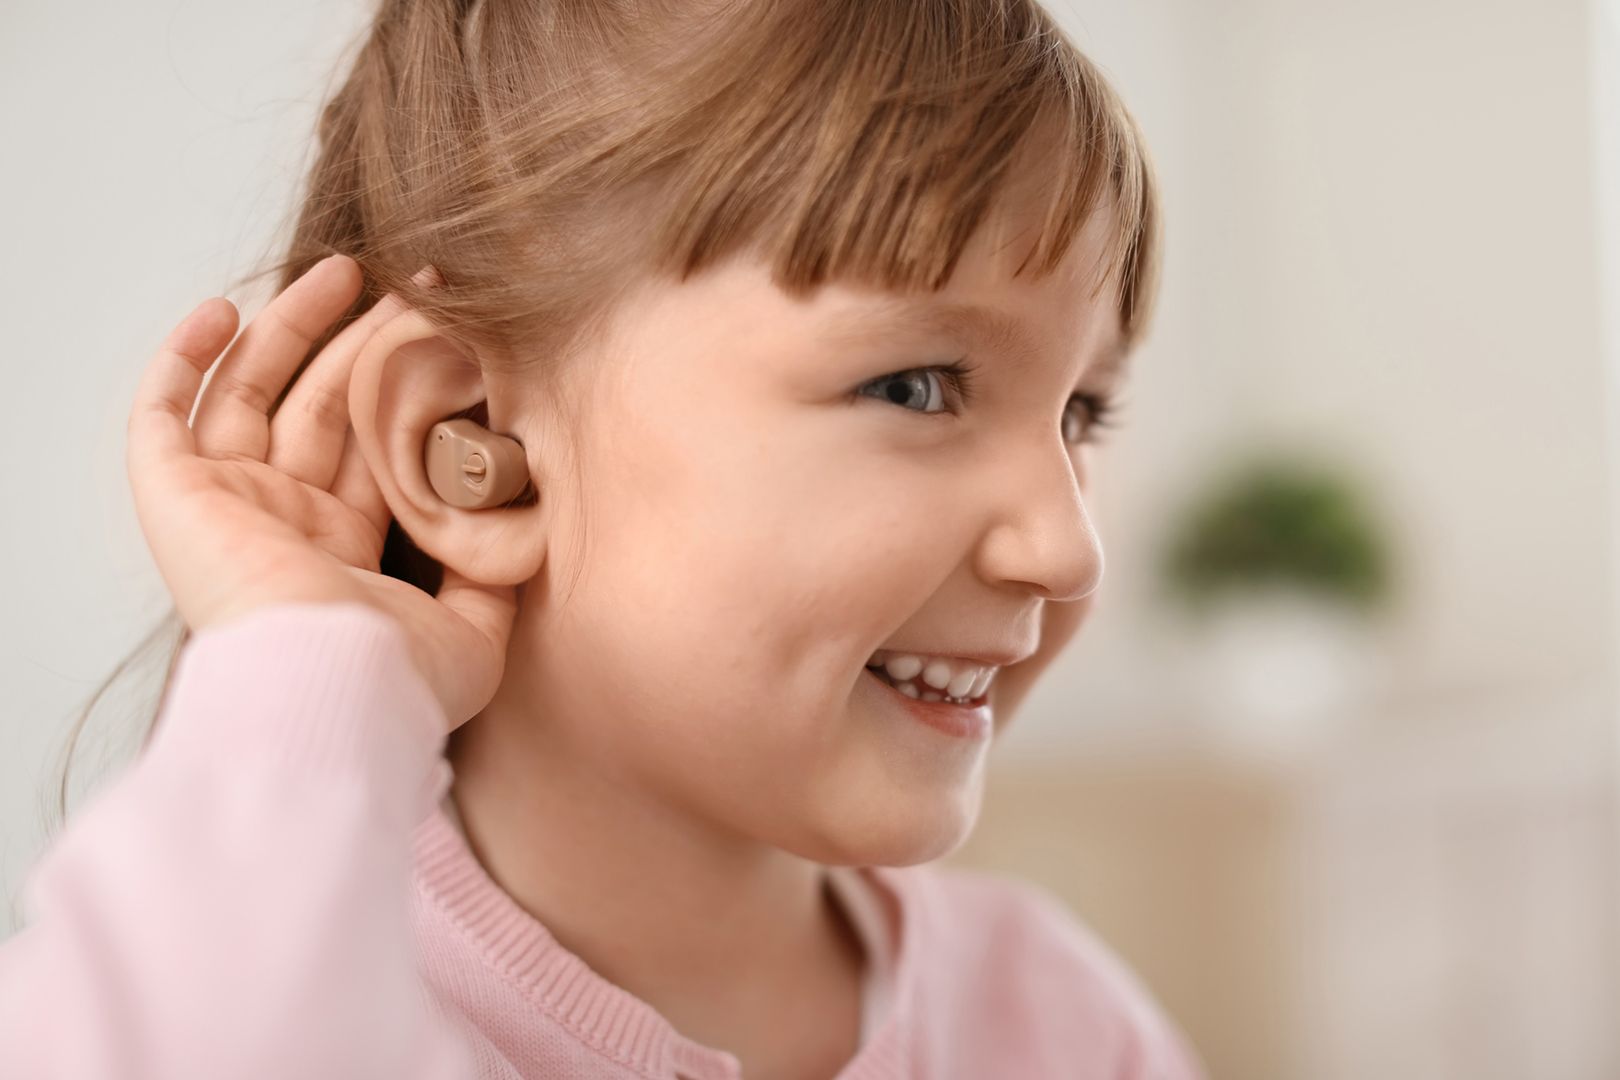 Kind mit Hörgerät im Ohr